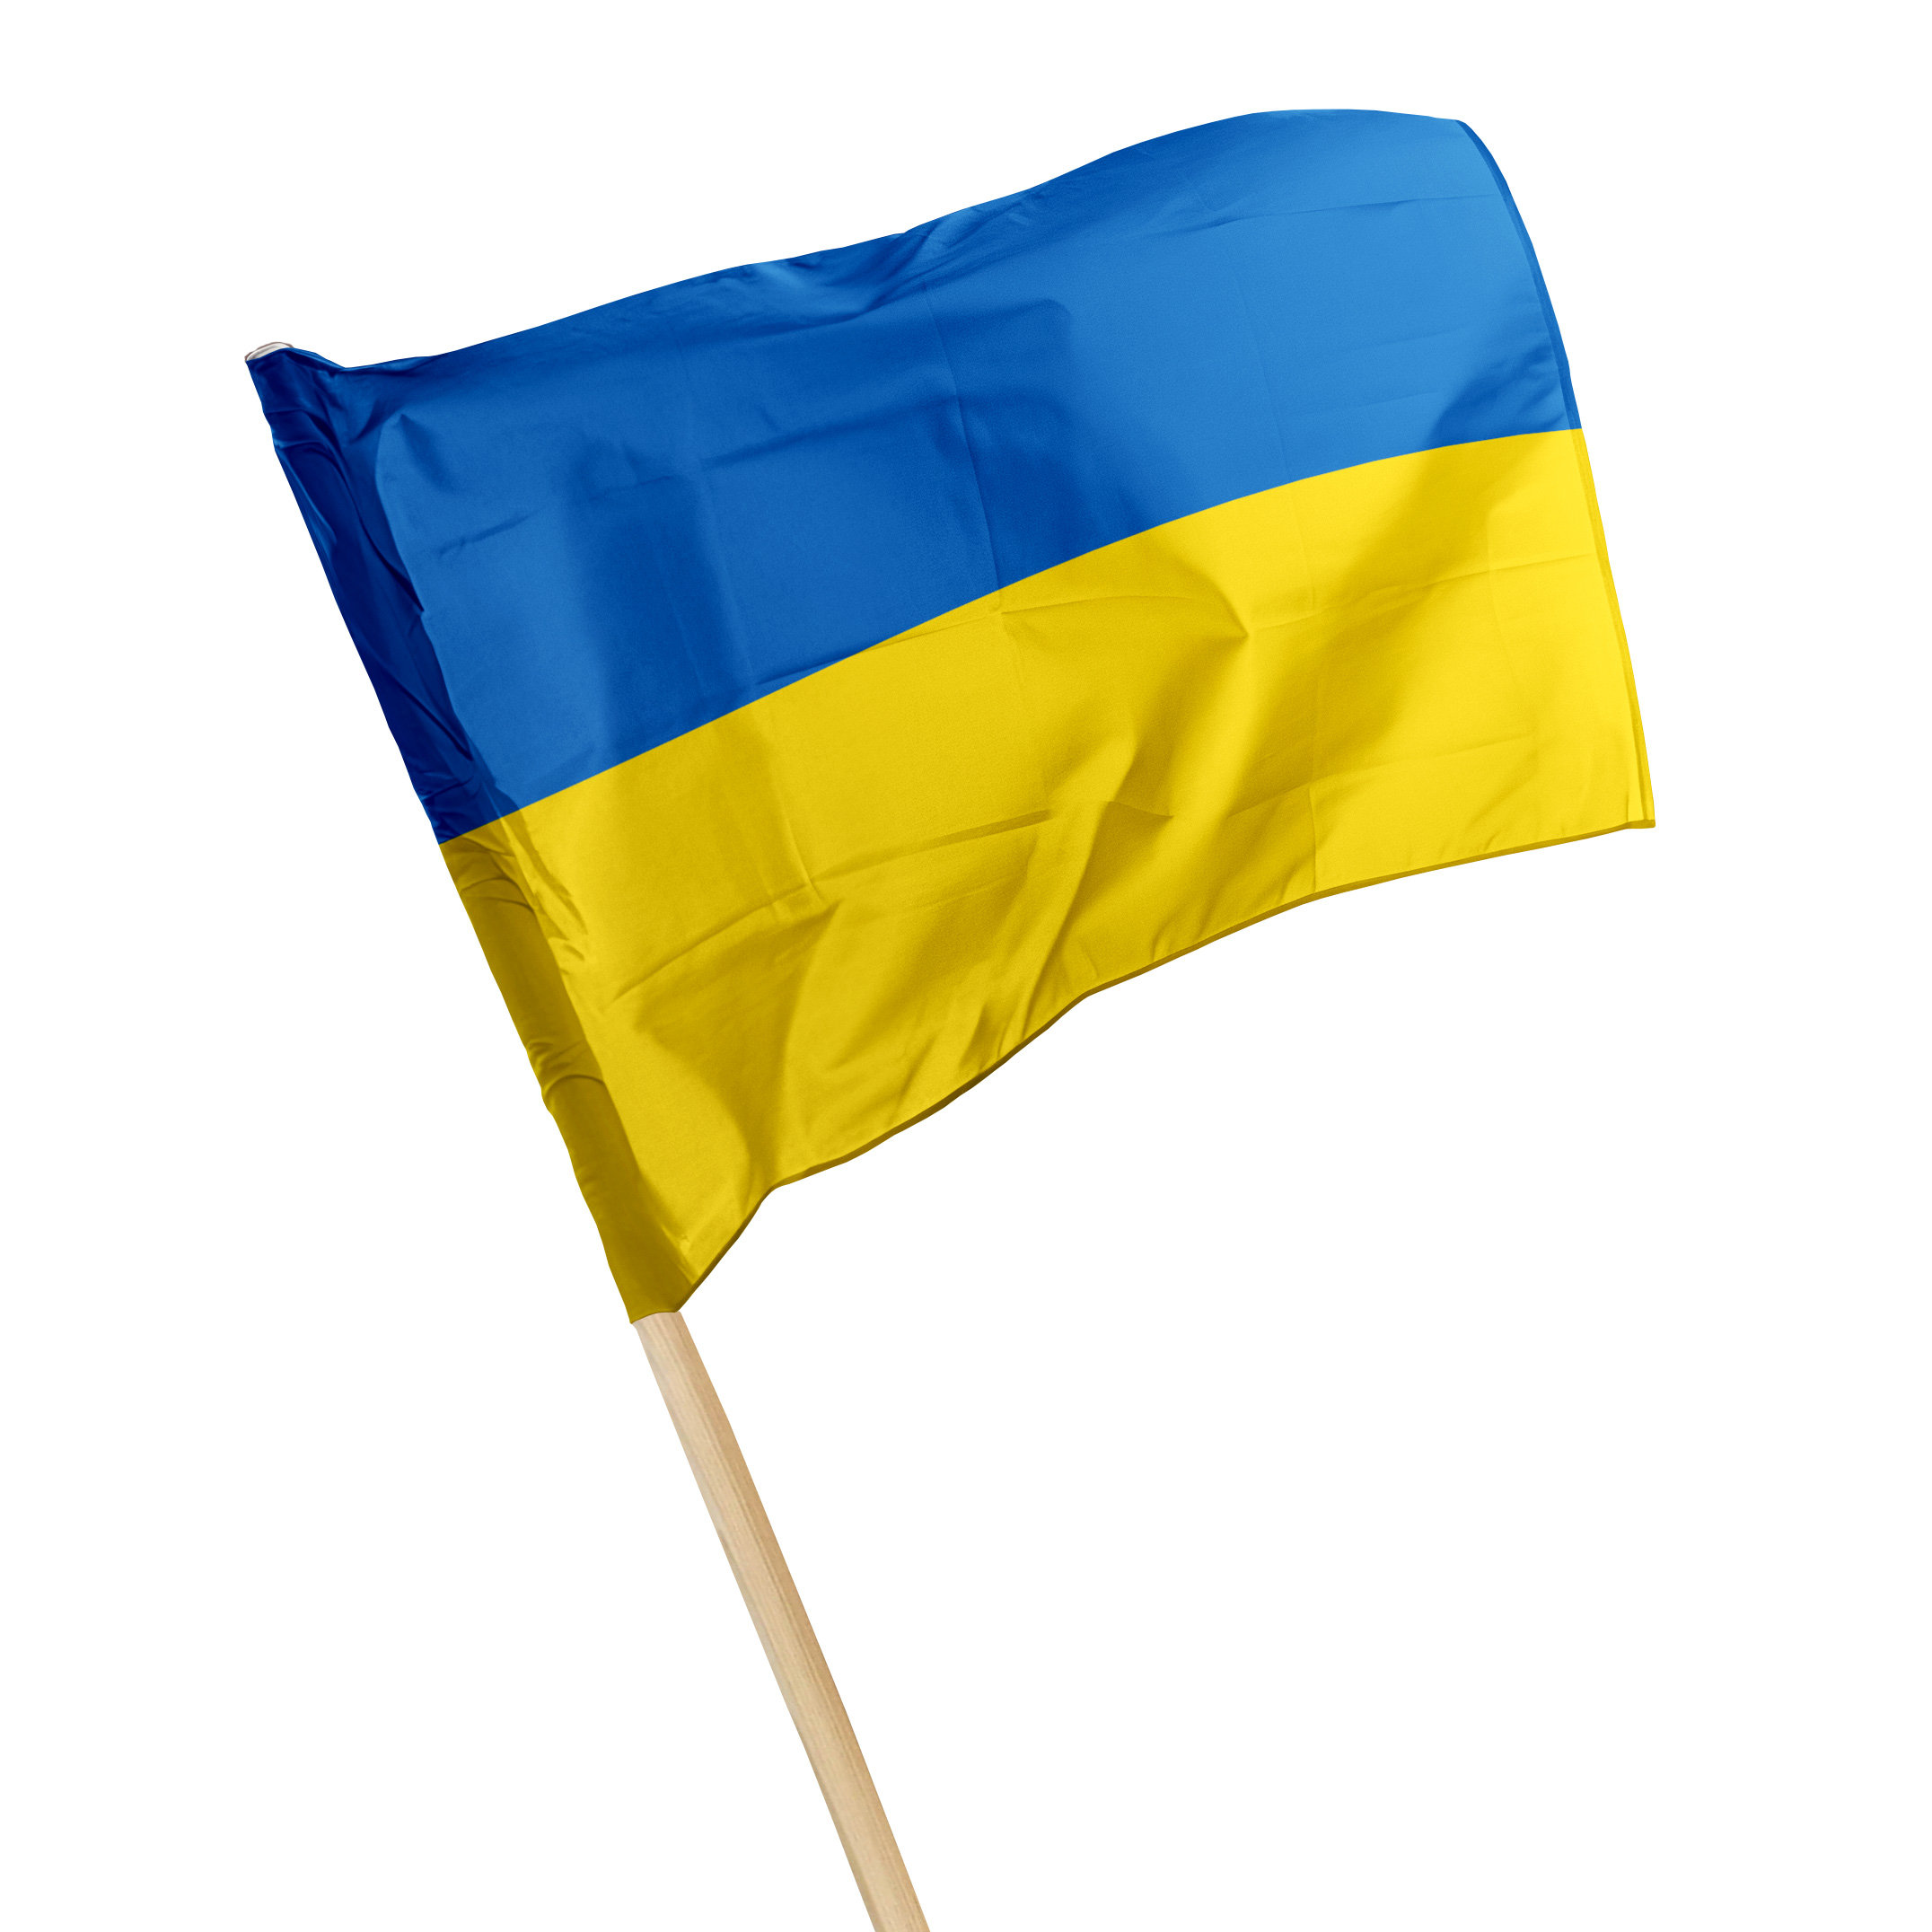 flaga-ukrainy-na-drzewcu